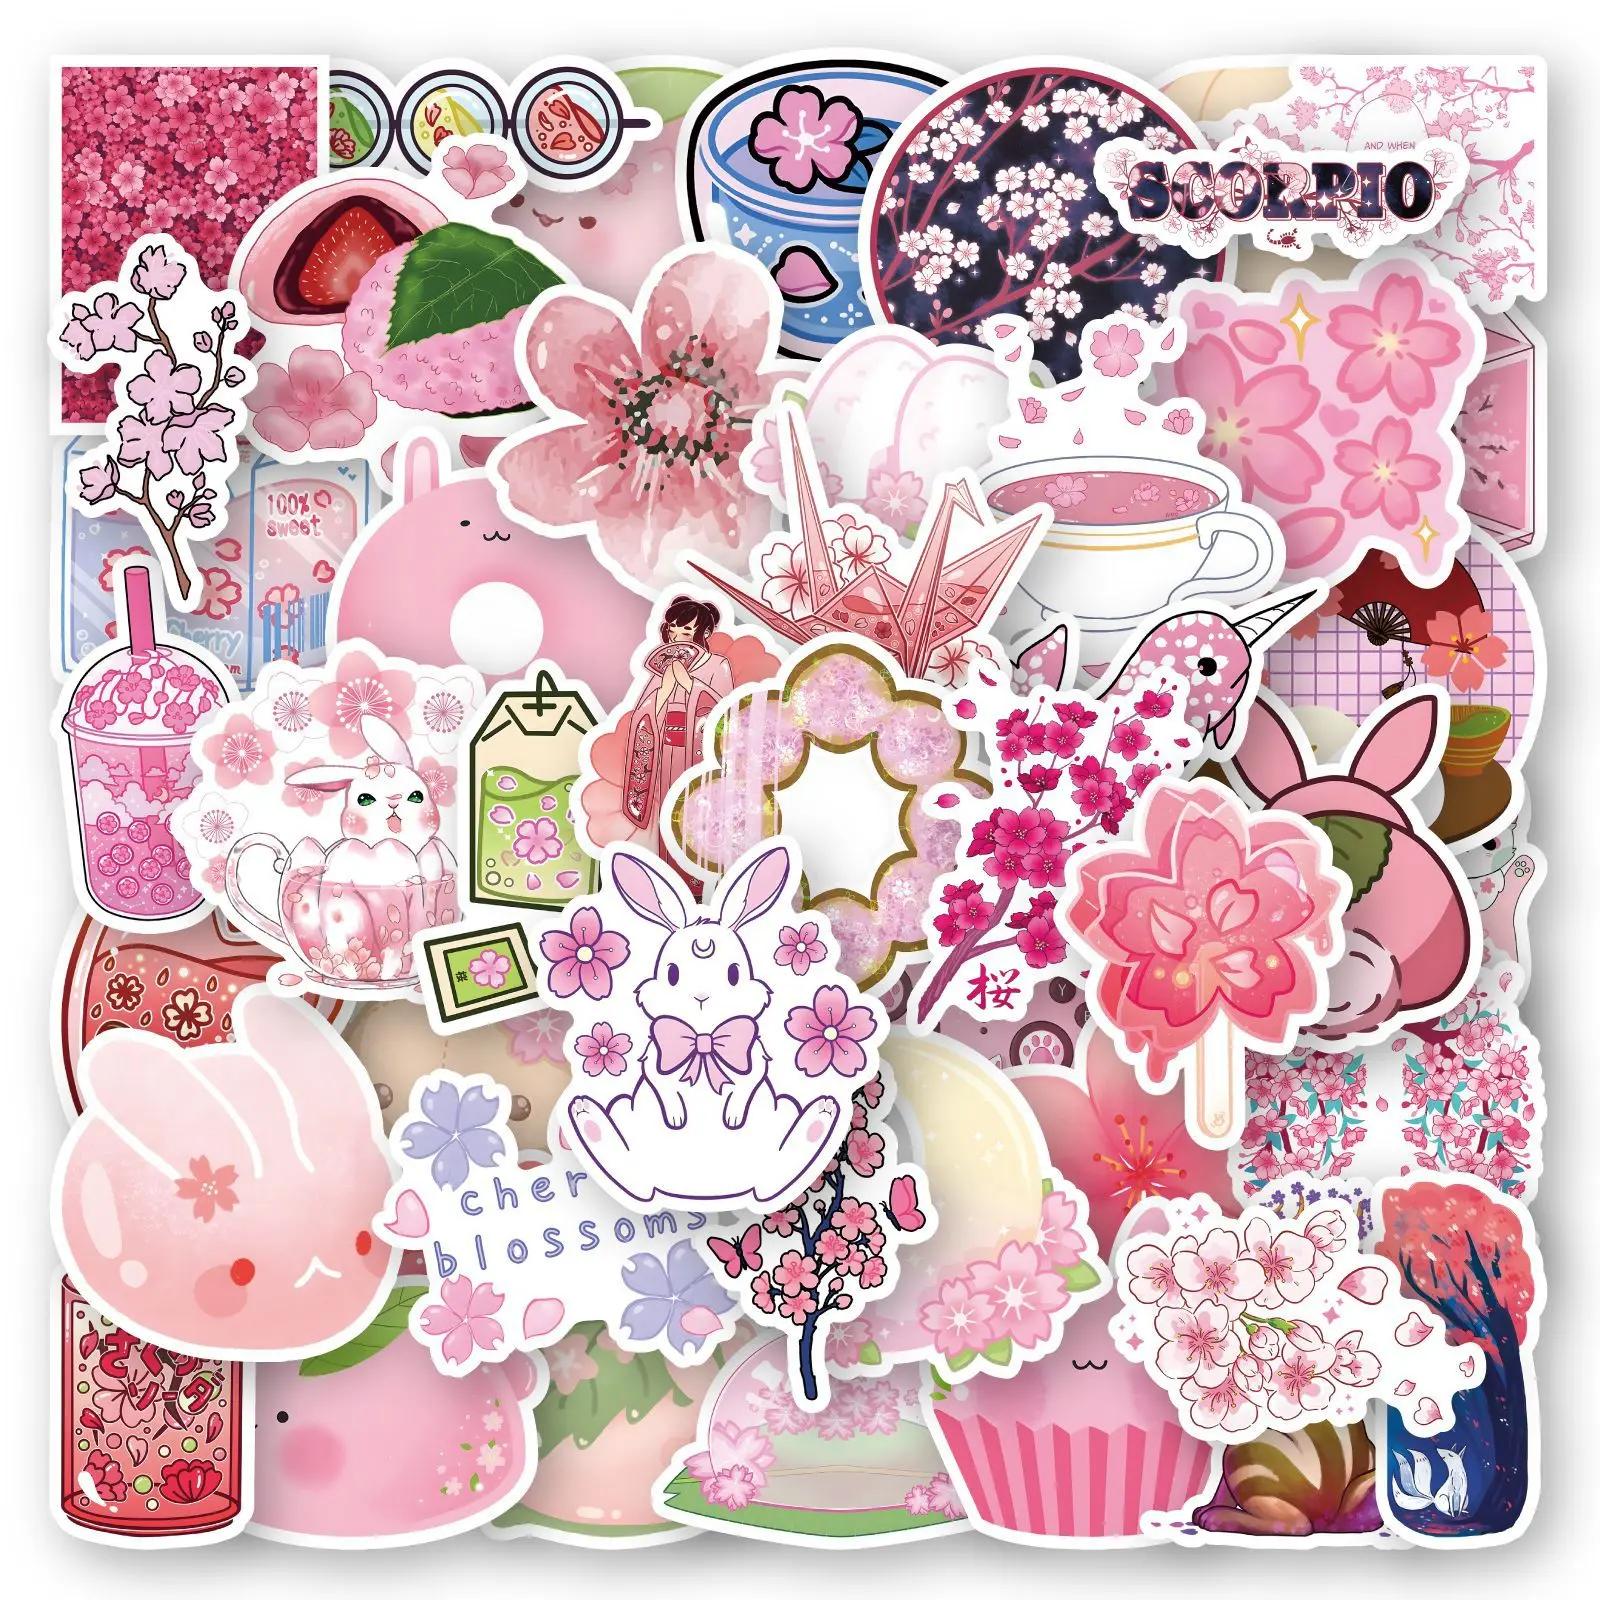 50Pcs Cute Animal Pink sakura Stickers Aesthetic Girls for Notebook Luggage Stationery Phone Cartoon Graffiti Sticker Toys